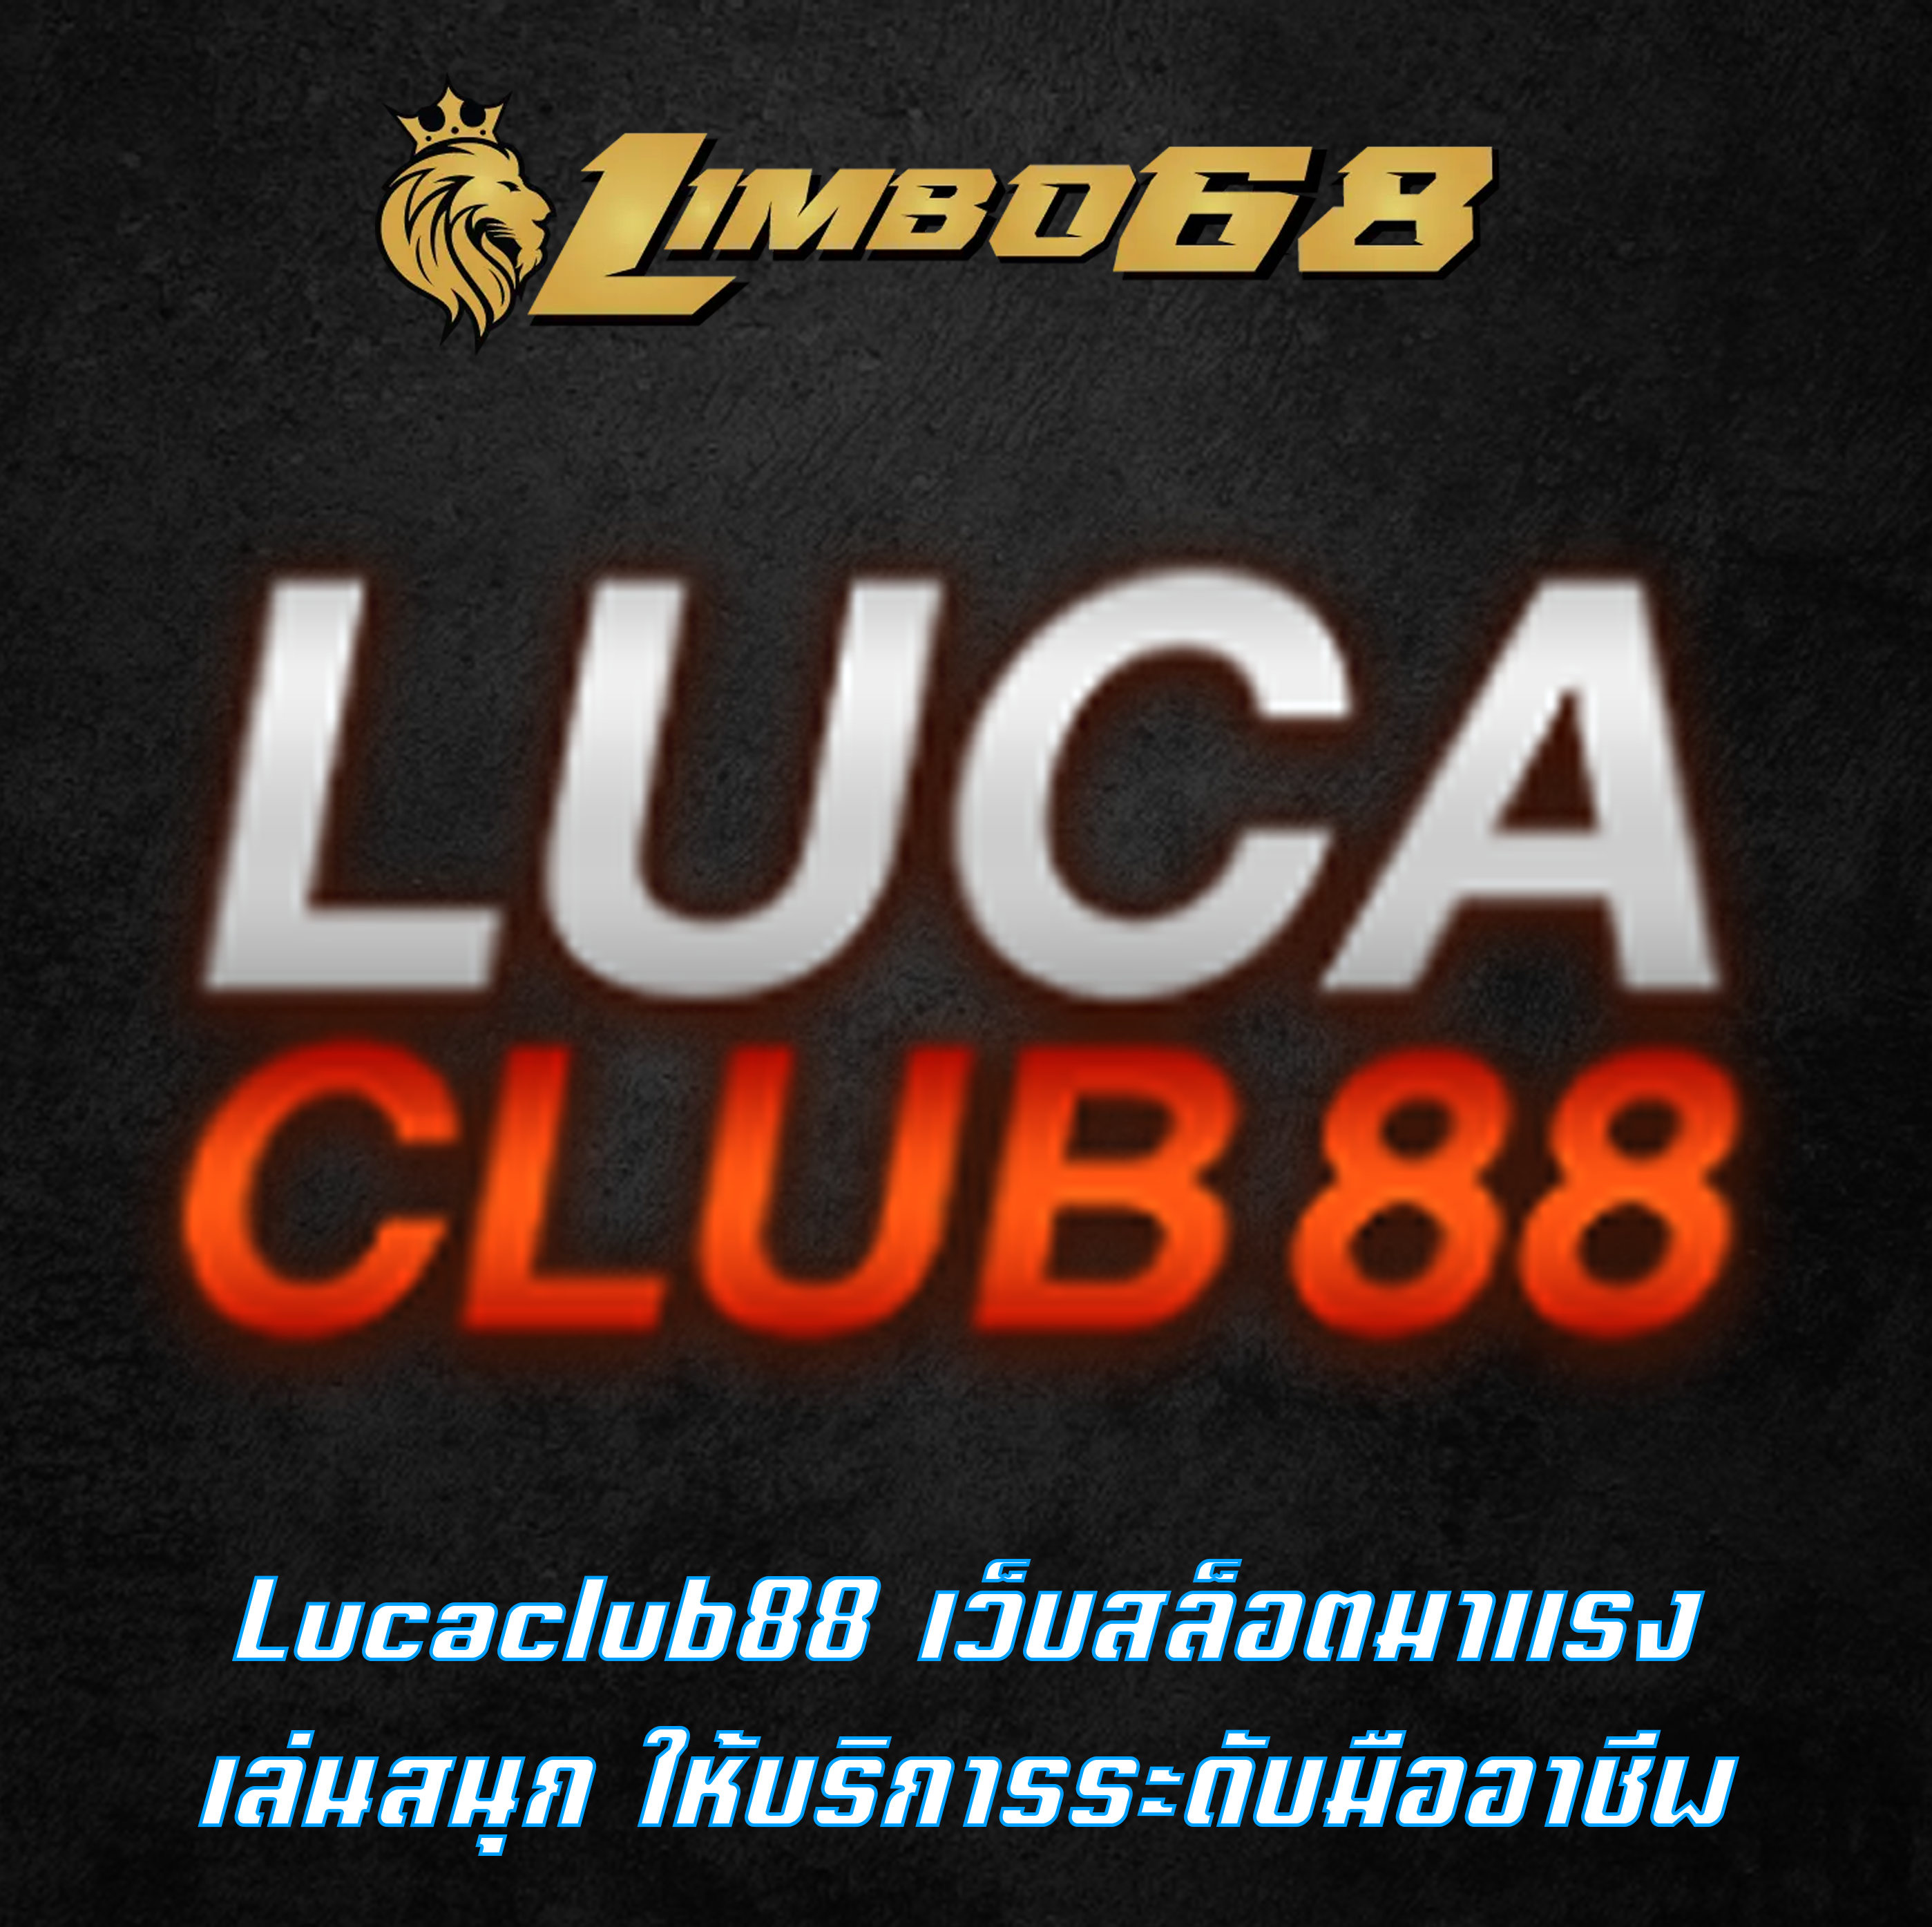 Lucaclub88 เว็บสล็อตมาแรง เล่นสนุก ให้บริการระดับมืออาชีพ